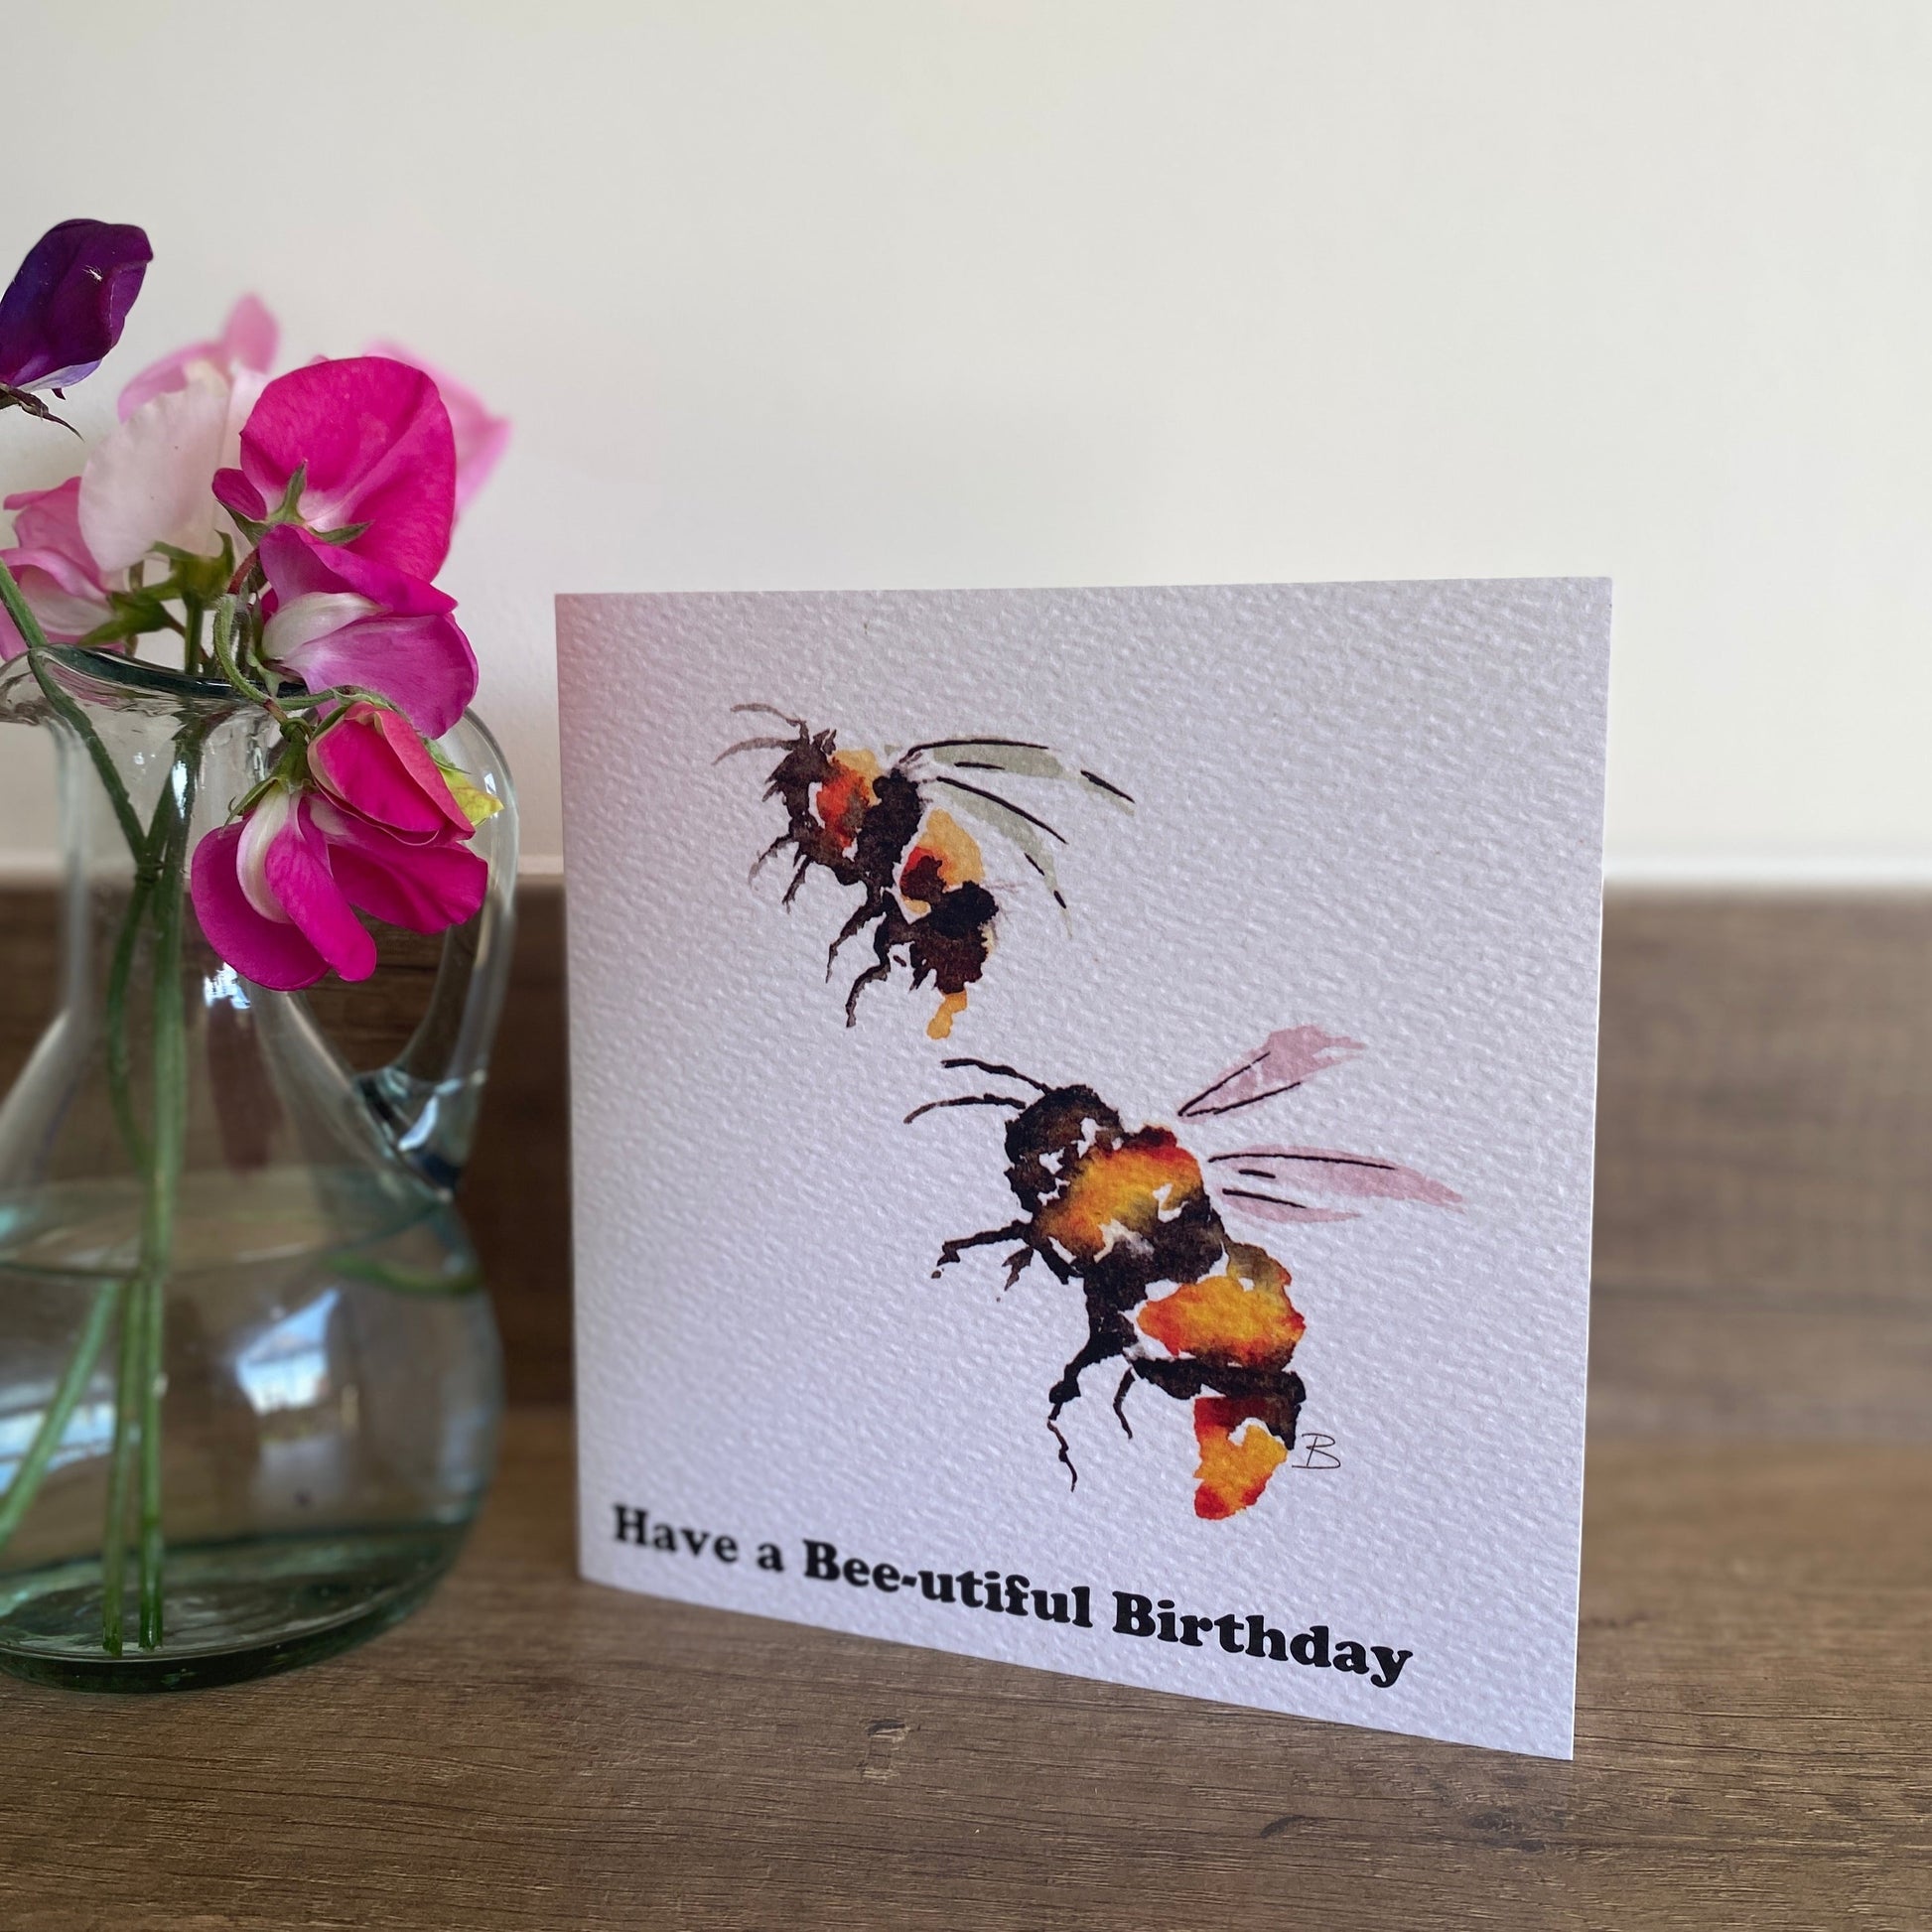 Have a bee-utiful birthday card